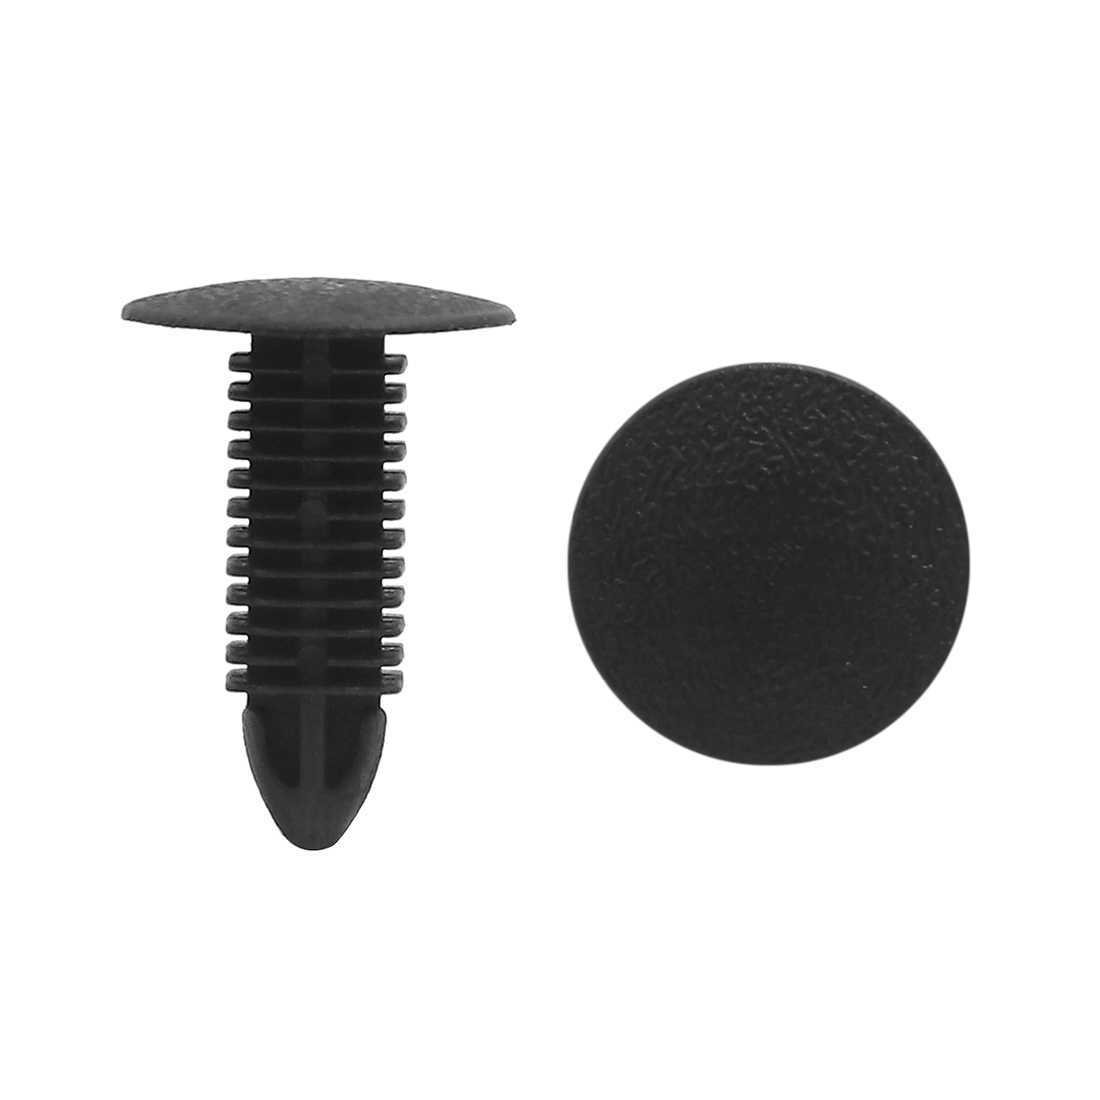 50pcs Plastic Rivets Fastener Bumper Push Screw Pin Clips 8 x 8mm Hole Black